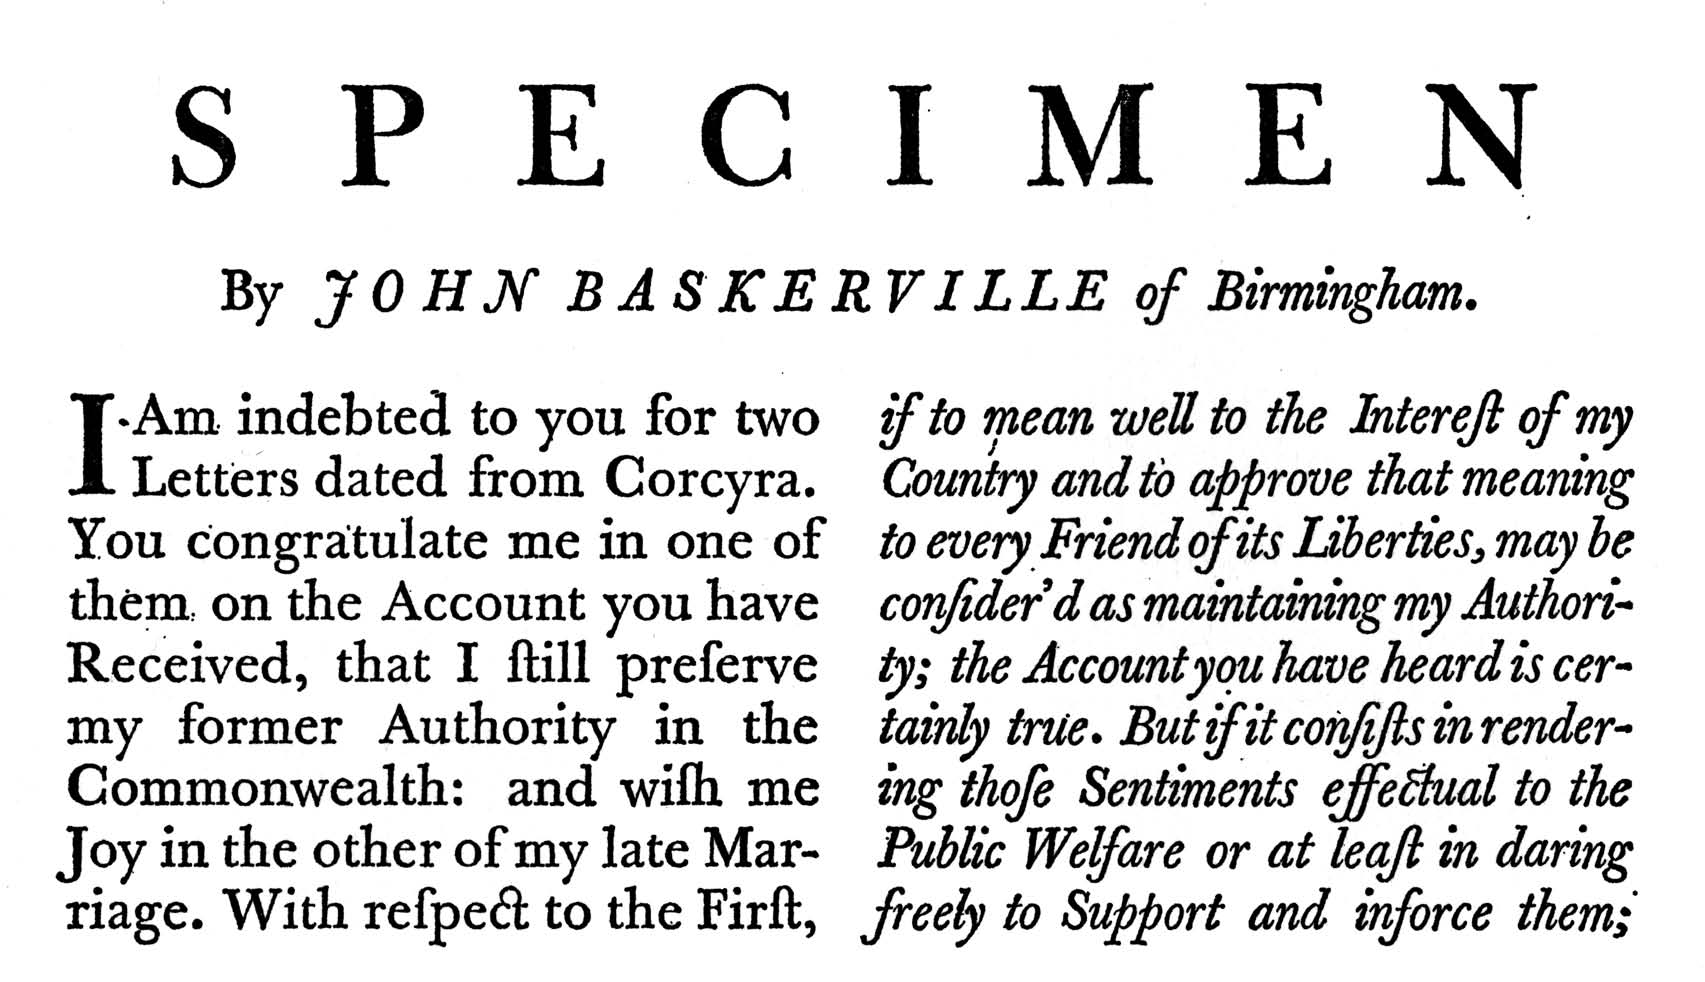 baskerville typeface wiki